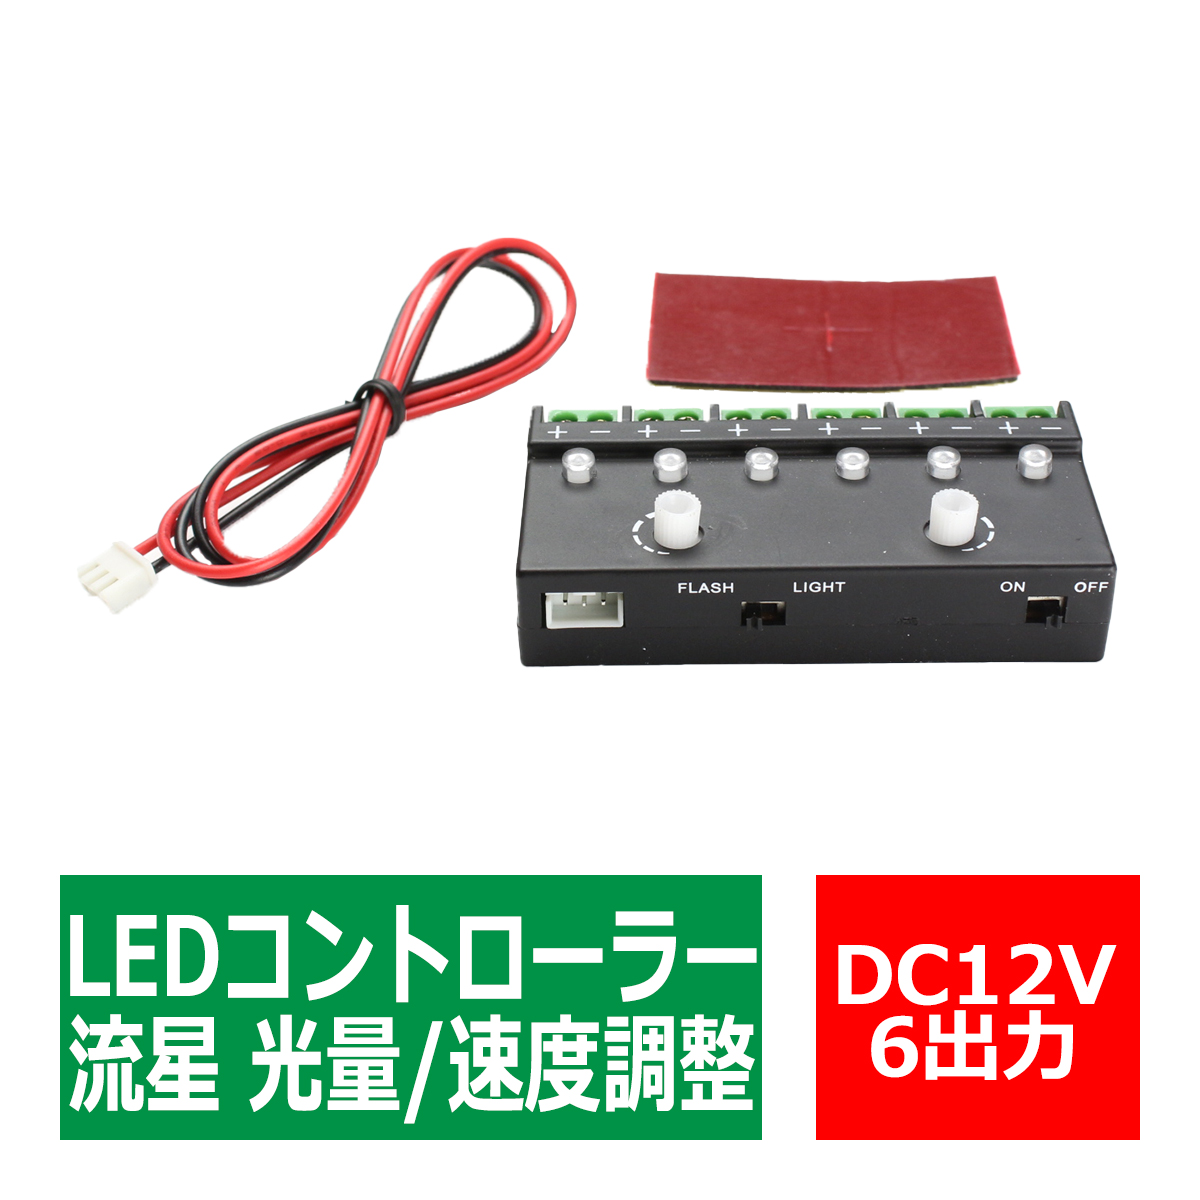 LED コントローラーユニット 6ch 光量/速度調整 流星モード 12V専用 